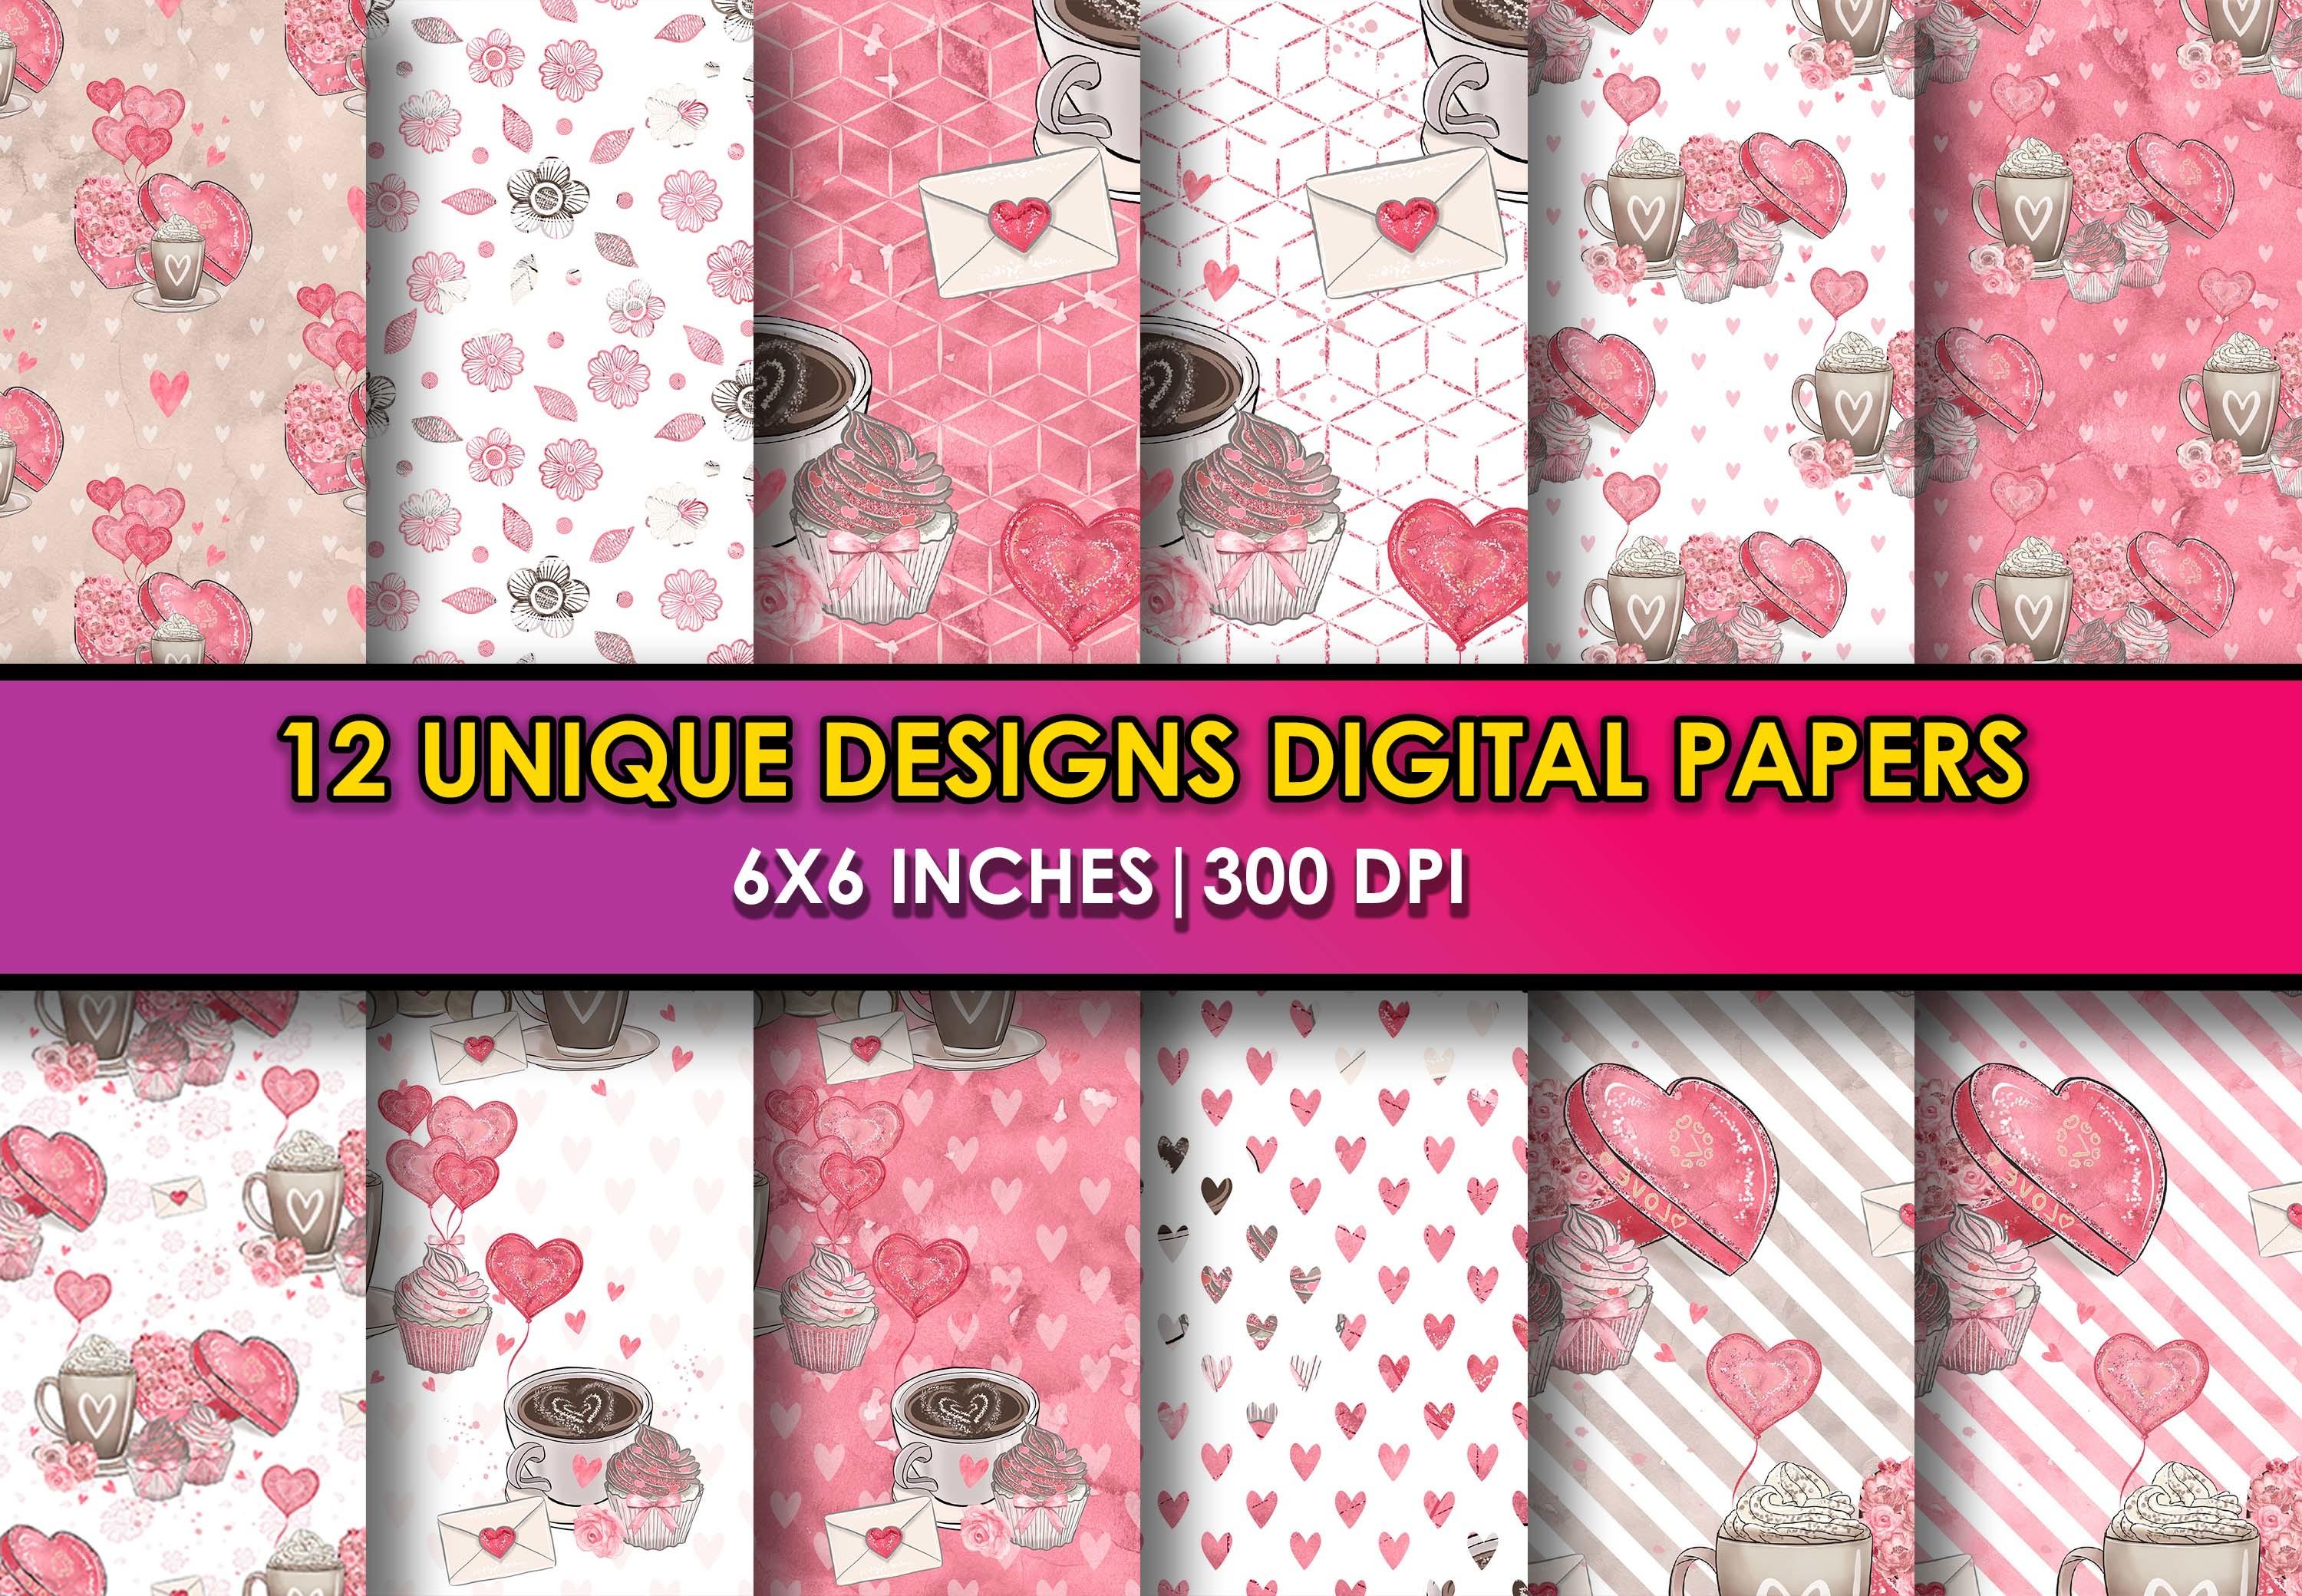 Be My Valentine Digital Paper Pack